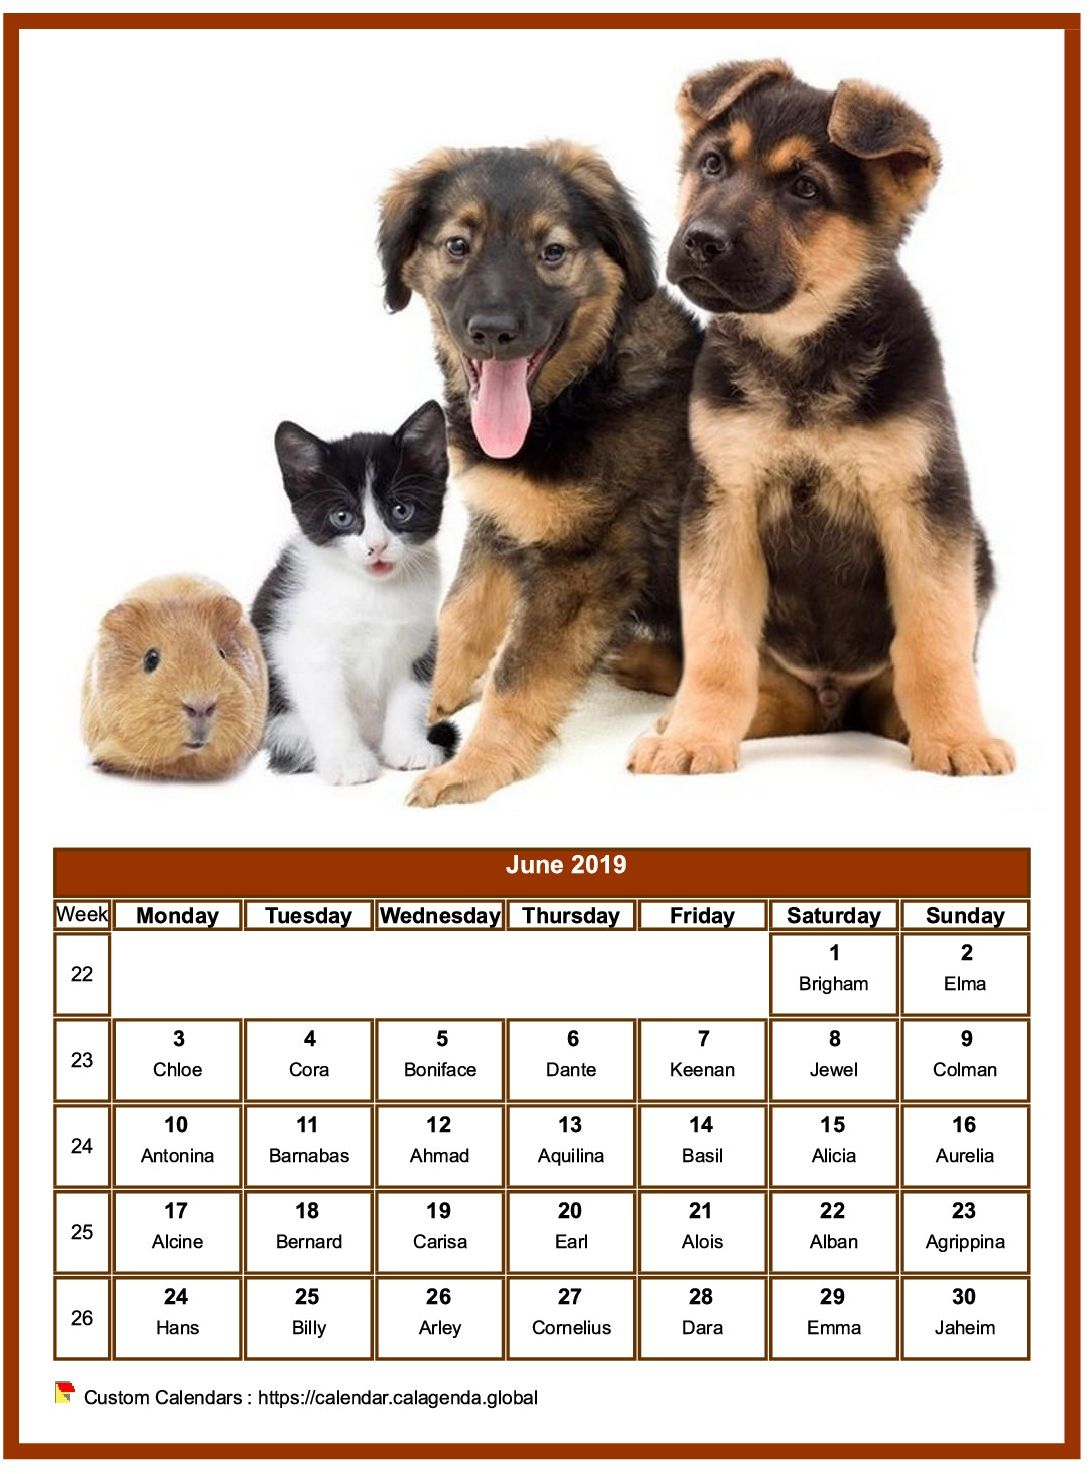 Calendar June 2019 dogs